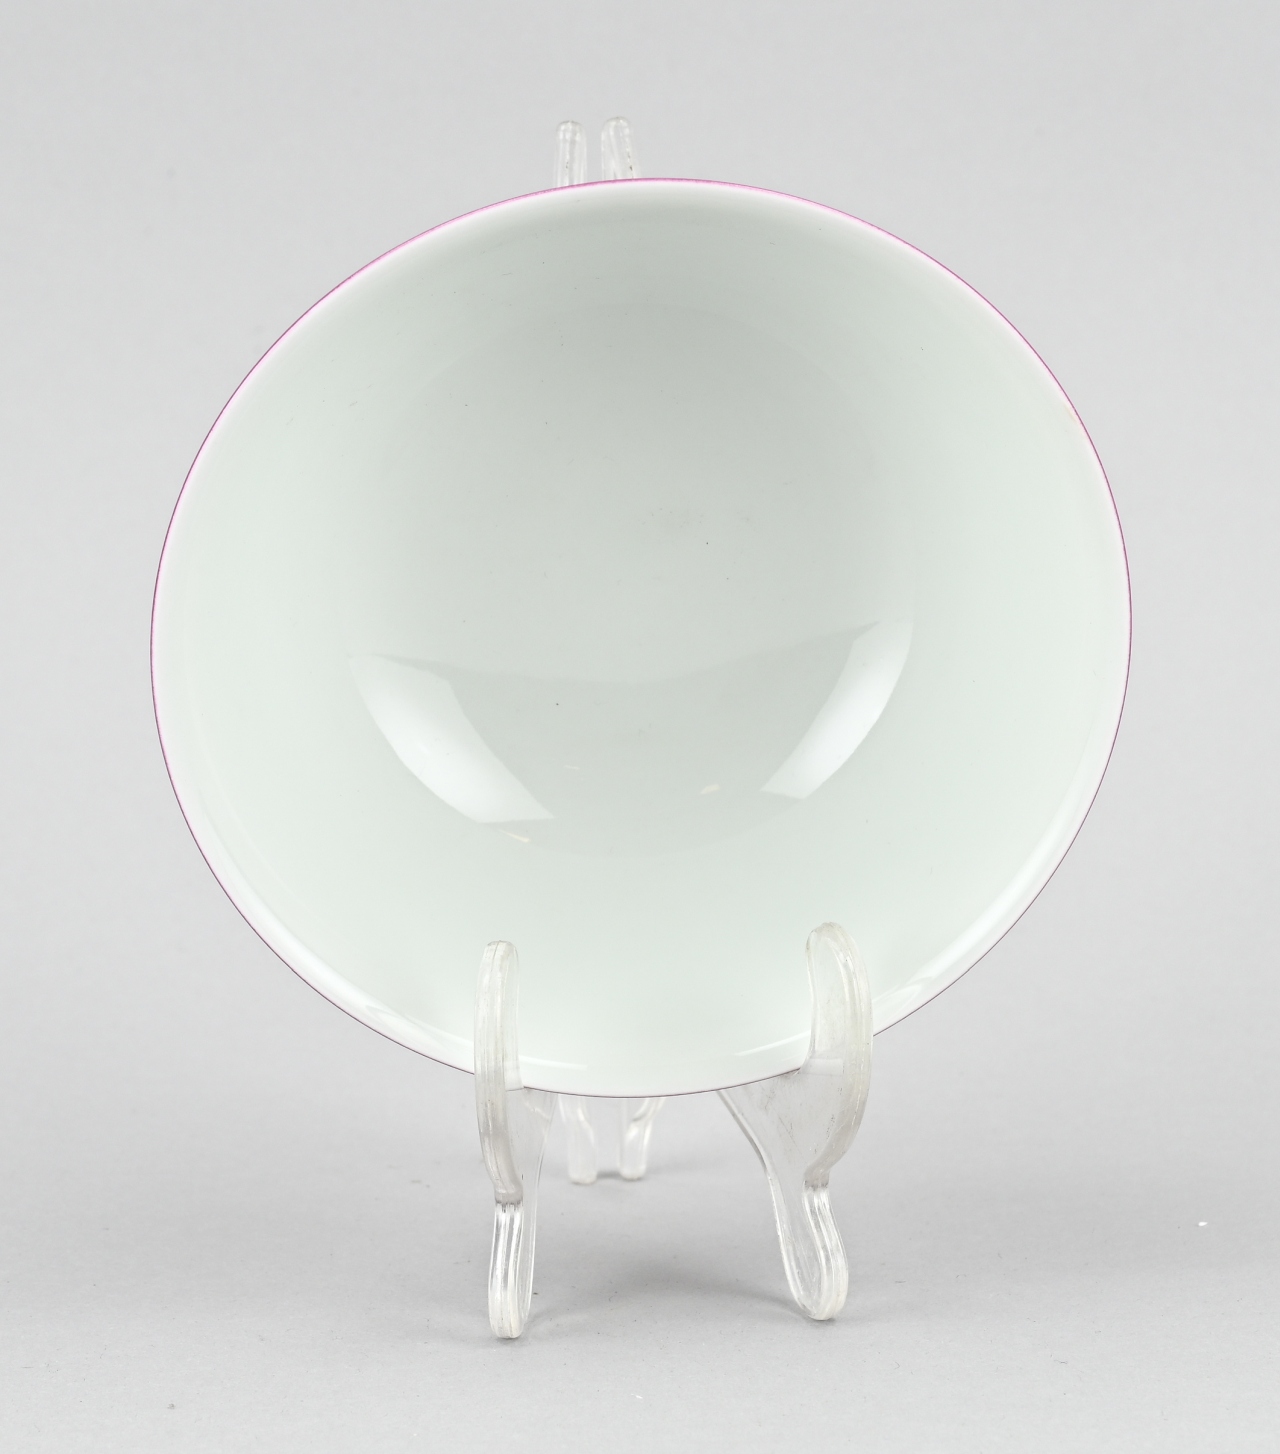 Chinese bowl Ã˜ 15 cm. - Image 2 of 3